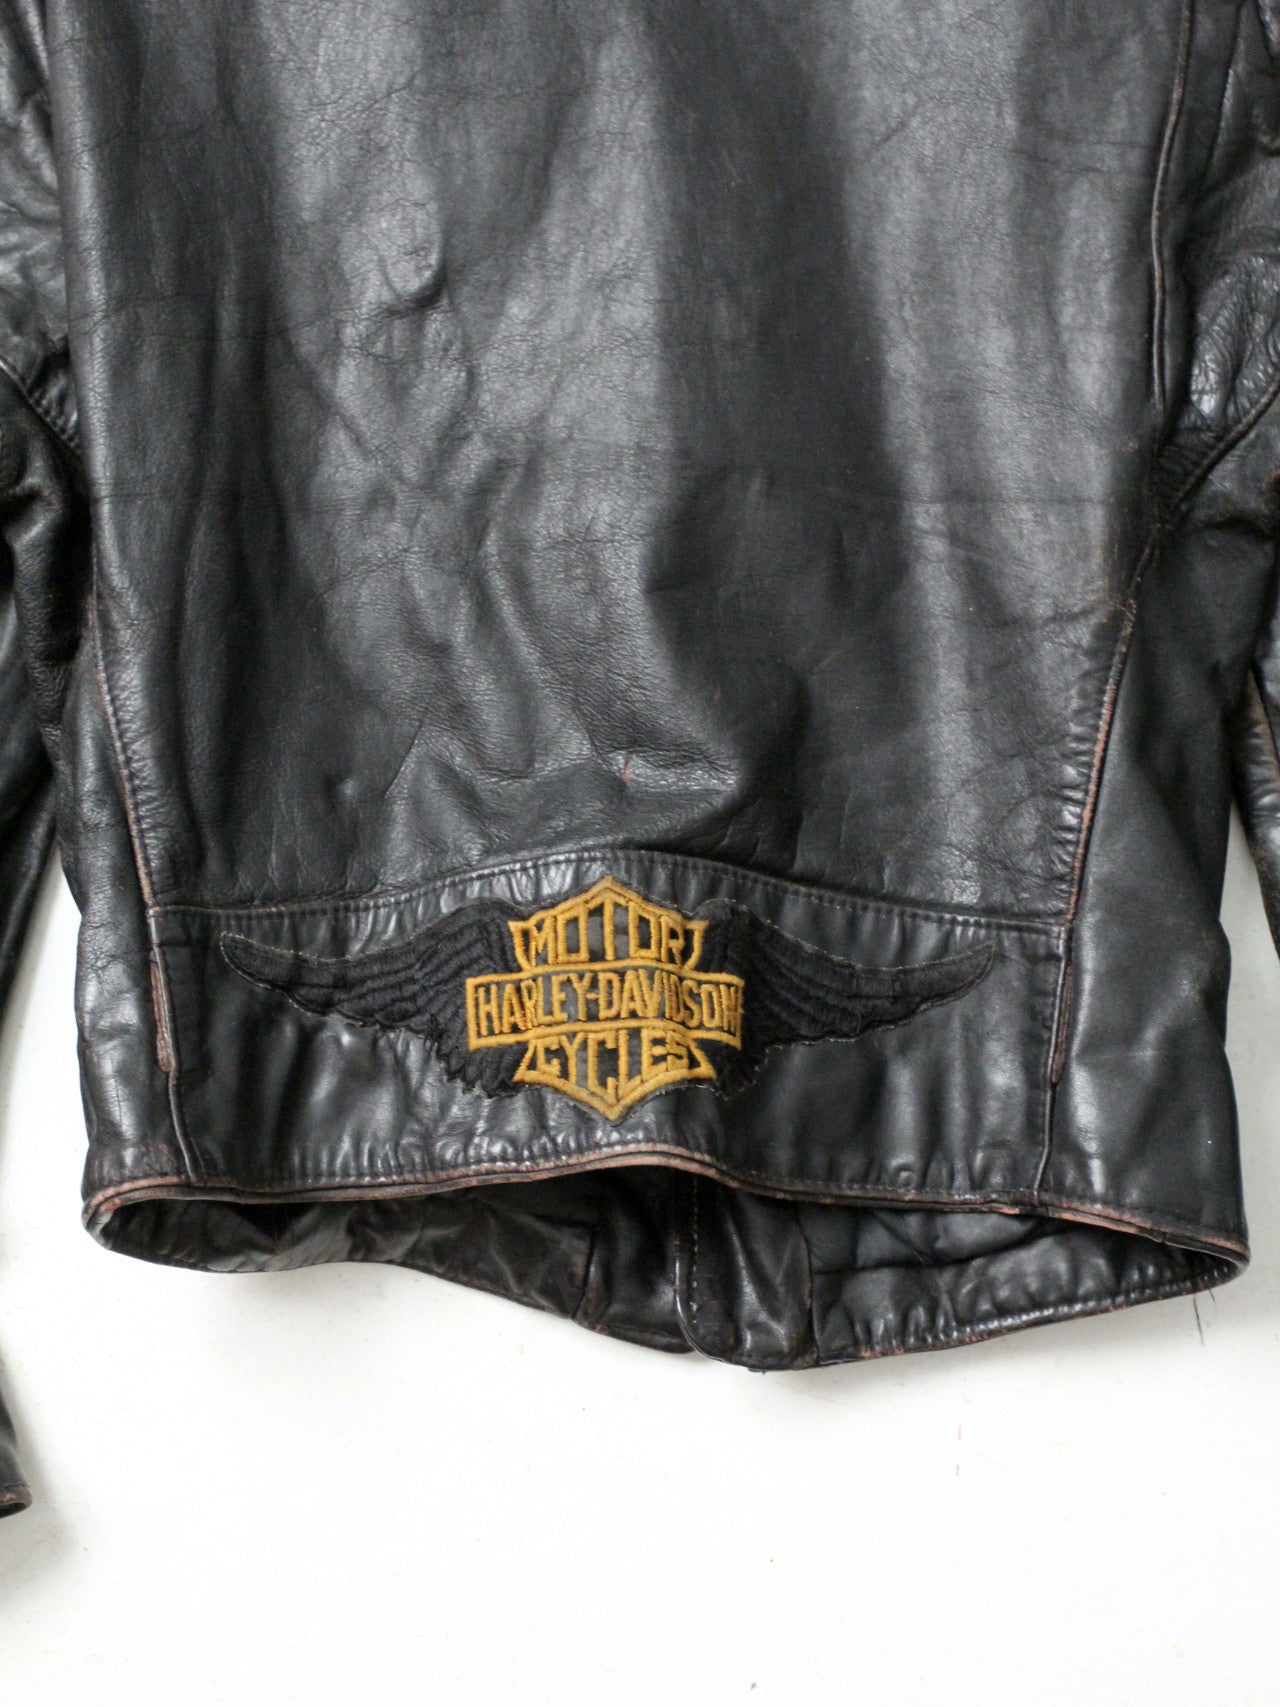 Harley-Davidson Authentic Vintage Leather Bag. Very